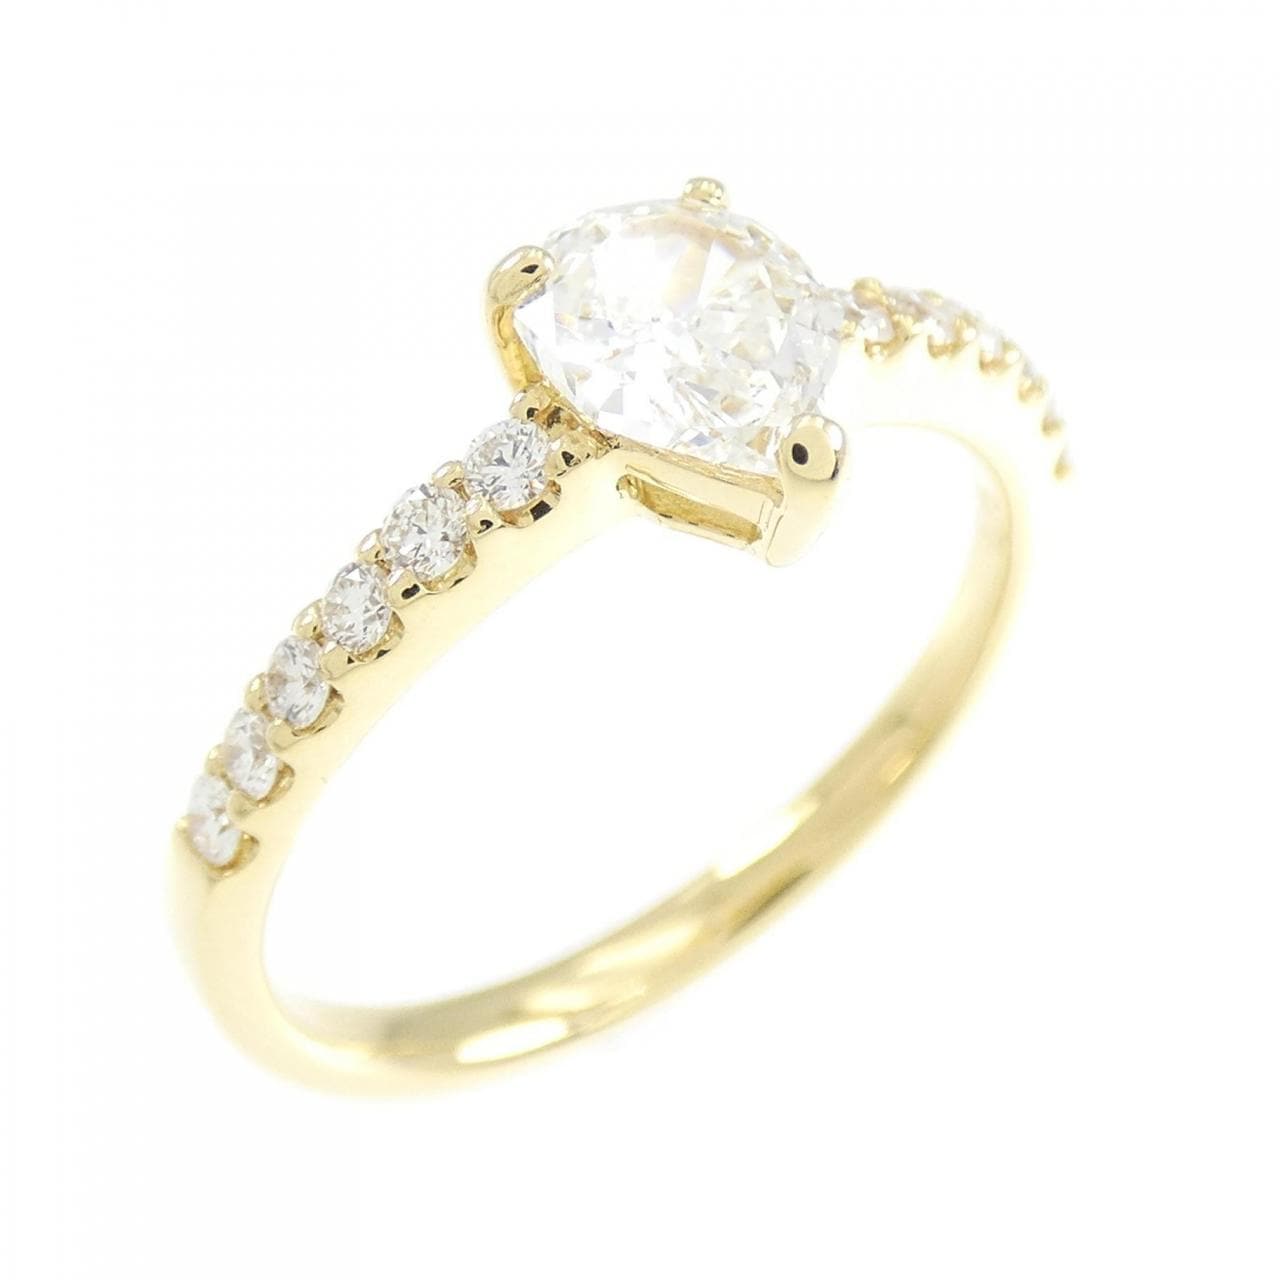 [Remake] K18YG Diamond Ring 0.546CT G VS2 Fancy Cut